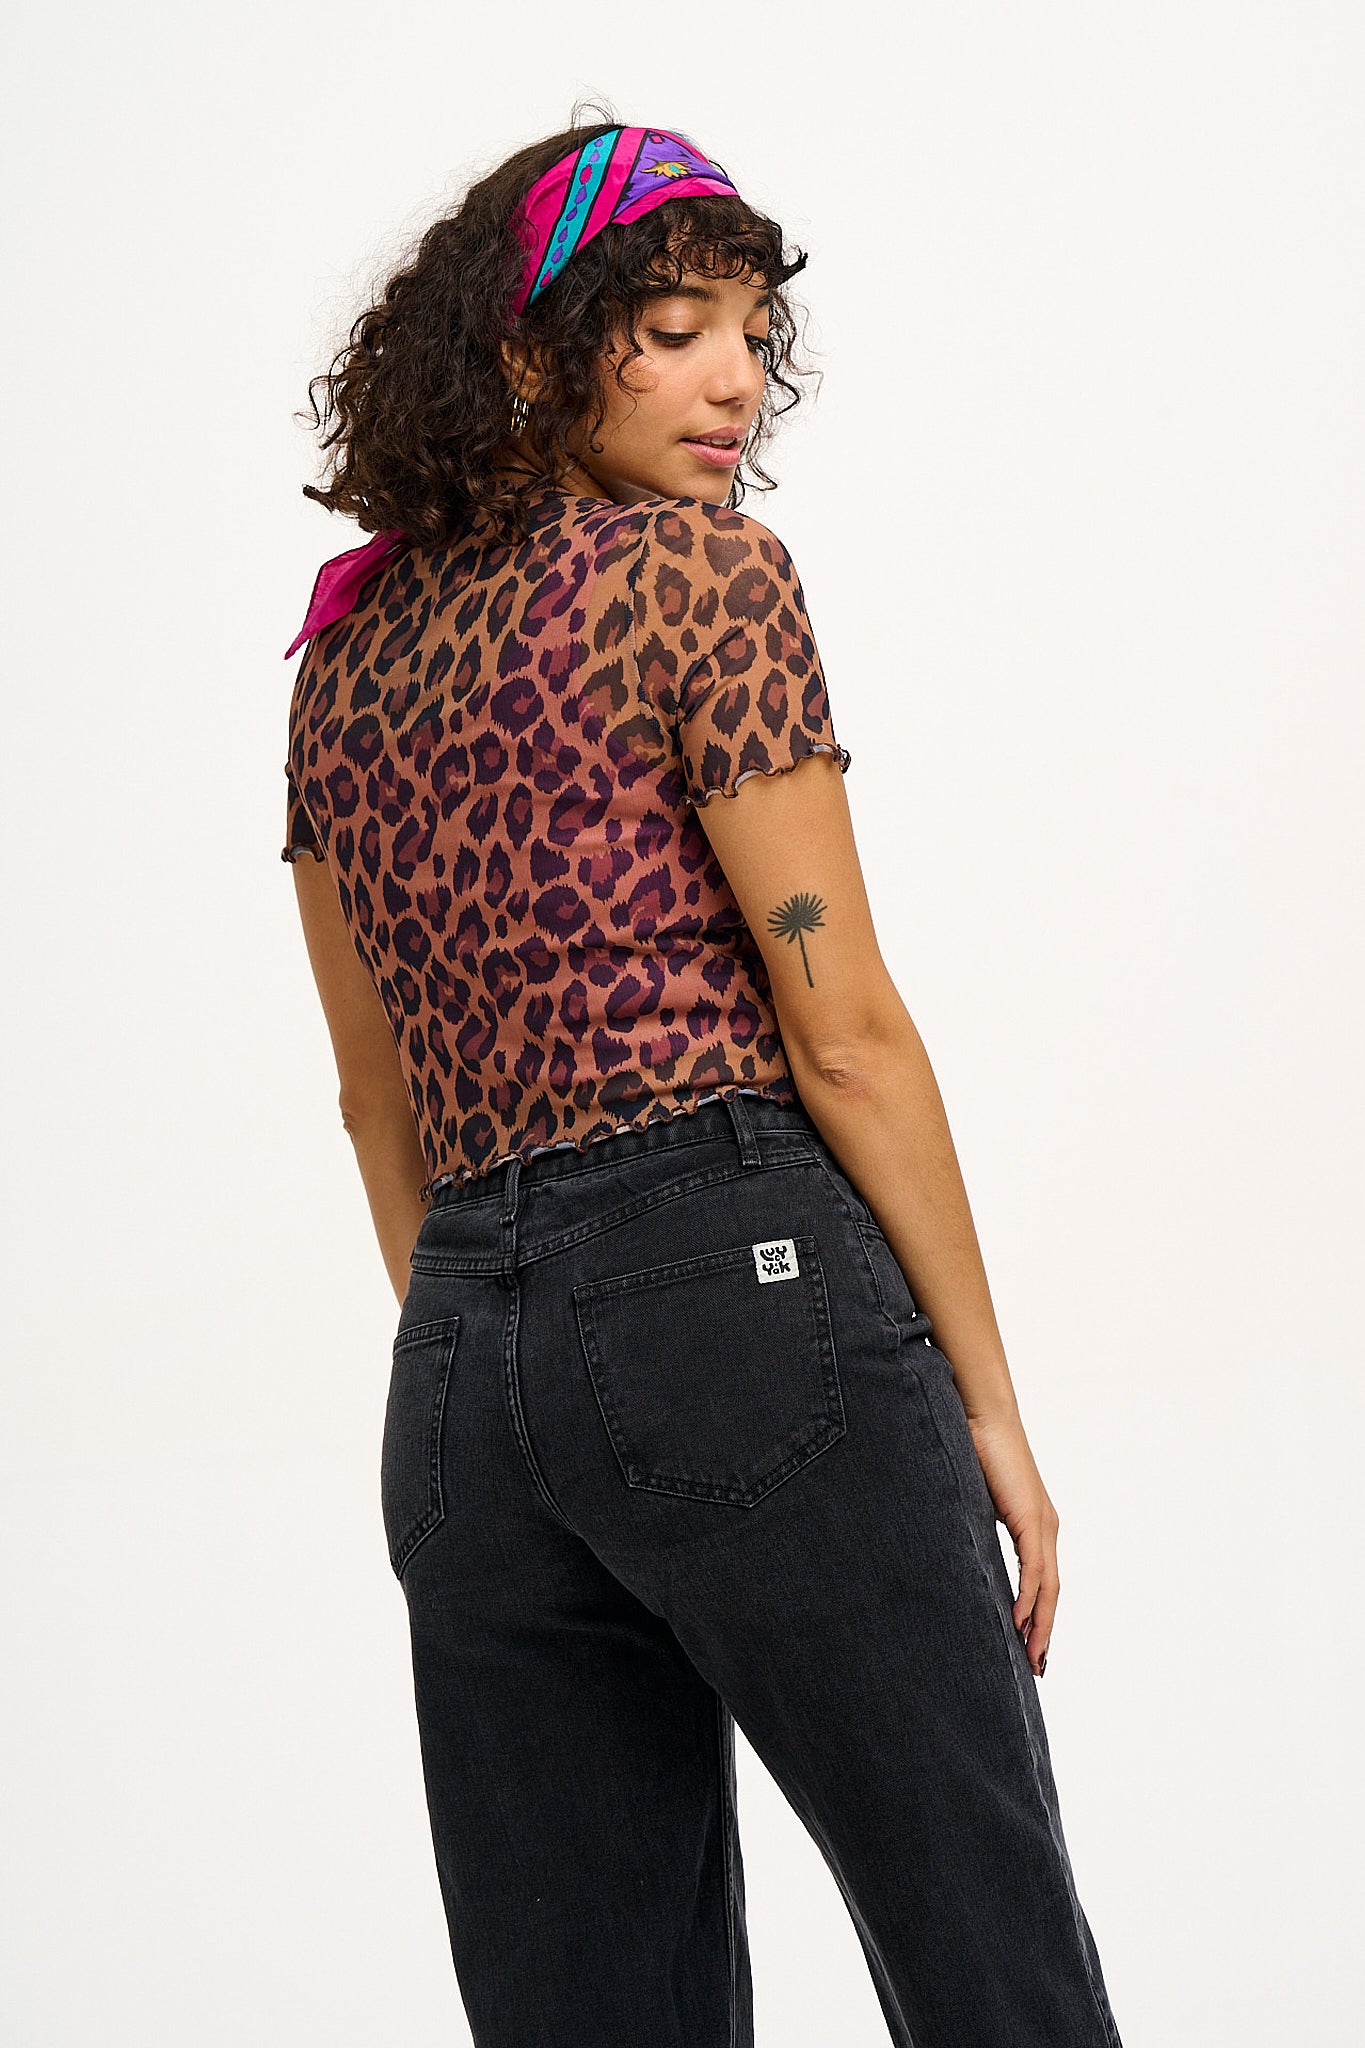 Greta - Recycled Mesh Top in Leopard Print